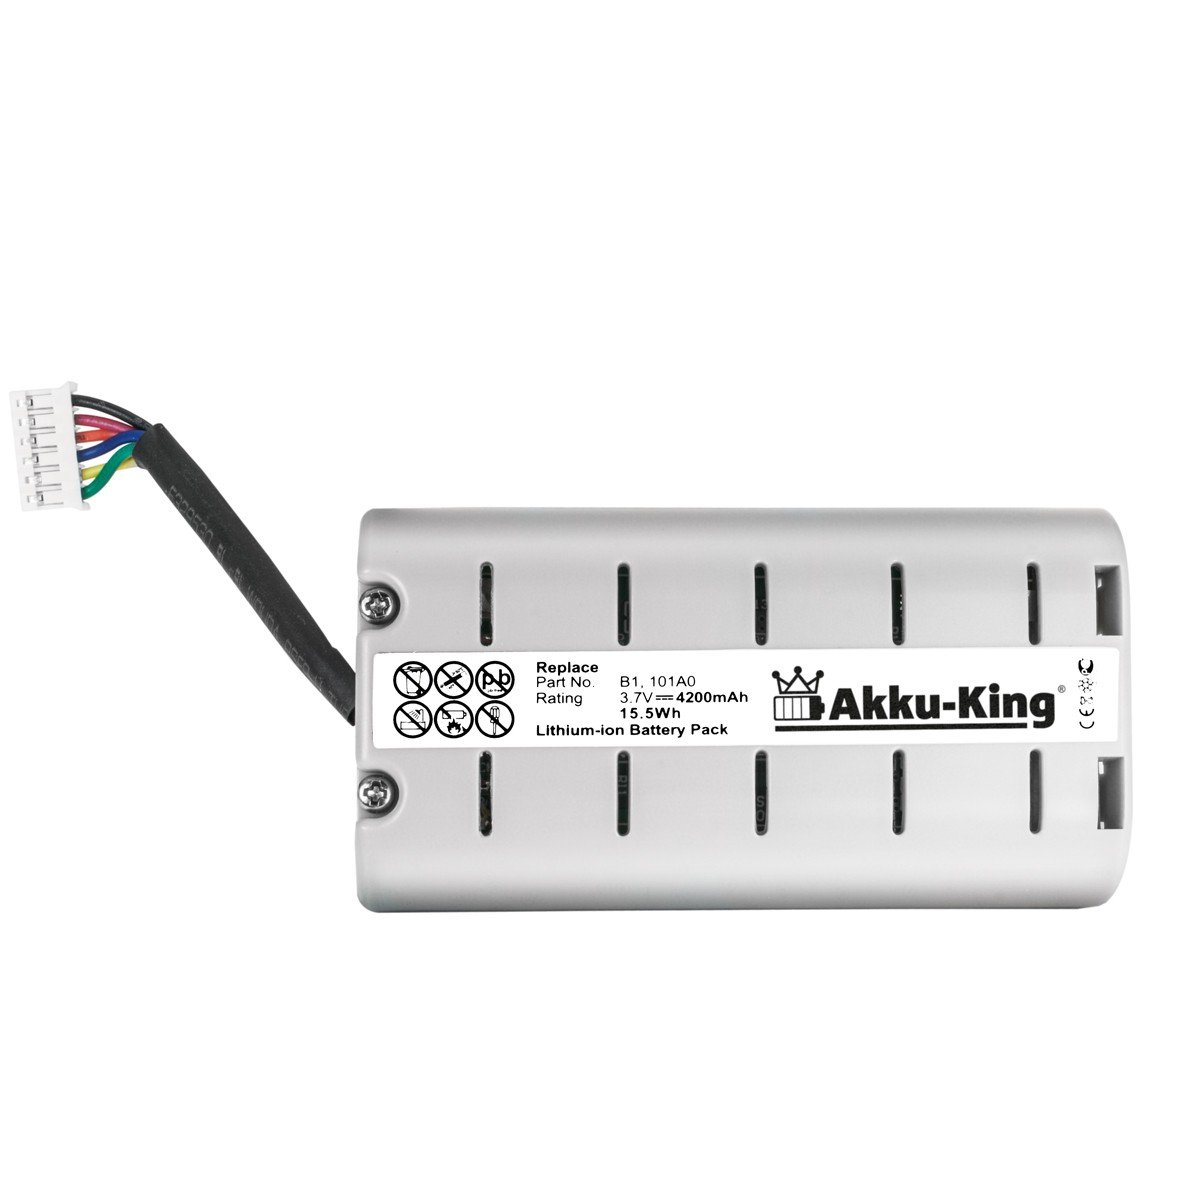 Akku-King Akku kompatibel mit Pure ChargePAK B1, 101A0 - Li-Ion 4200mAh - für One Mini, VL61114, EVOKE1, Evoke D2, Evoke D2 Domino